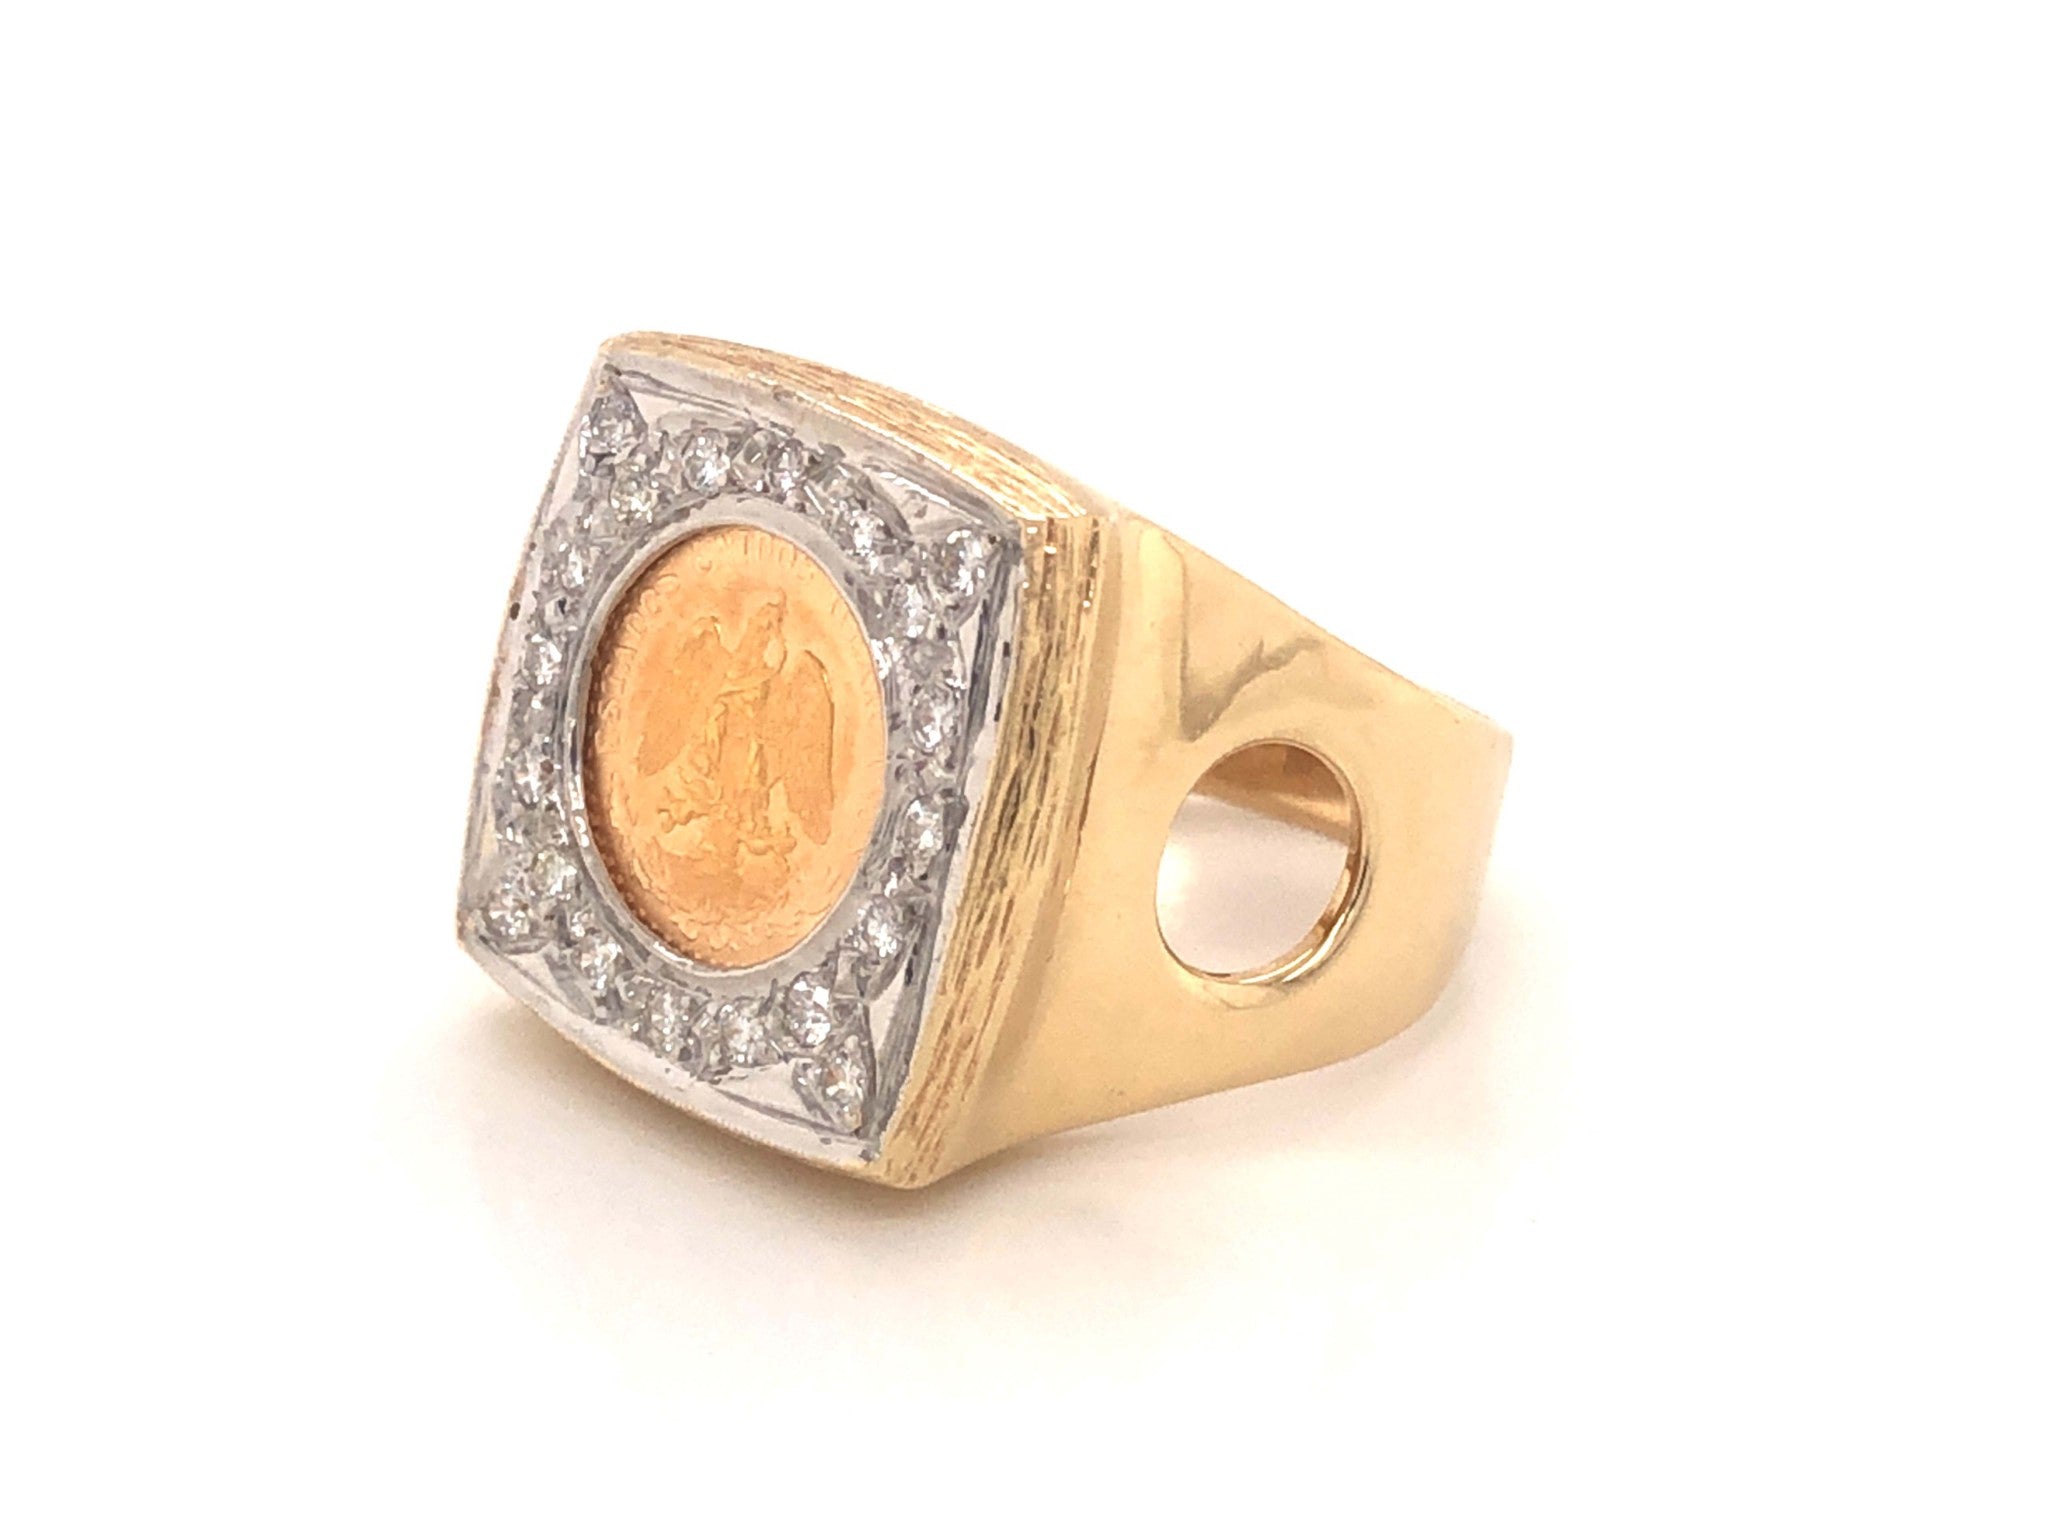 Dos Pesos Gold Coin Diamond Ring in 14k Yellow Gold